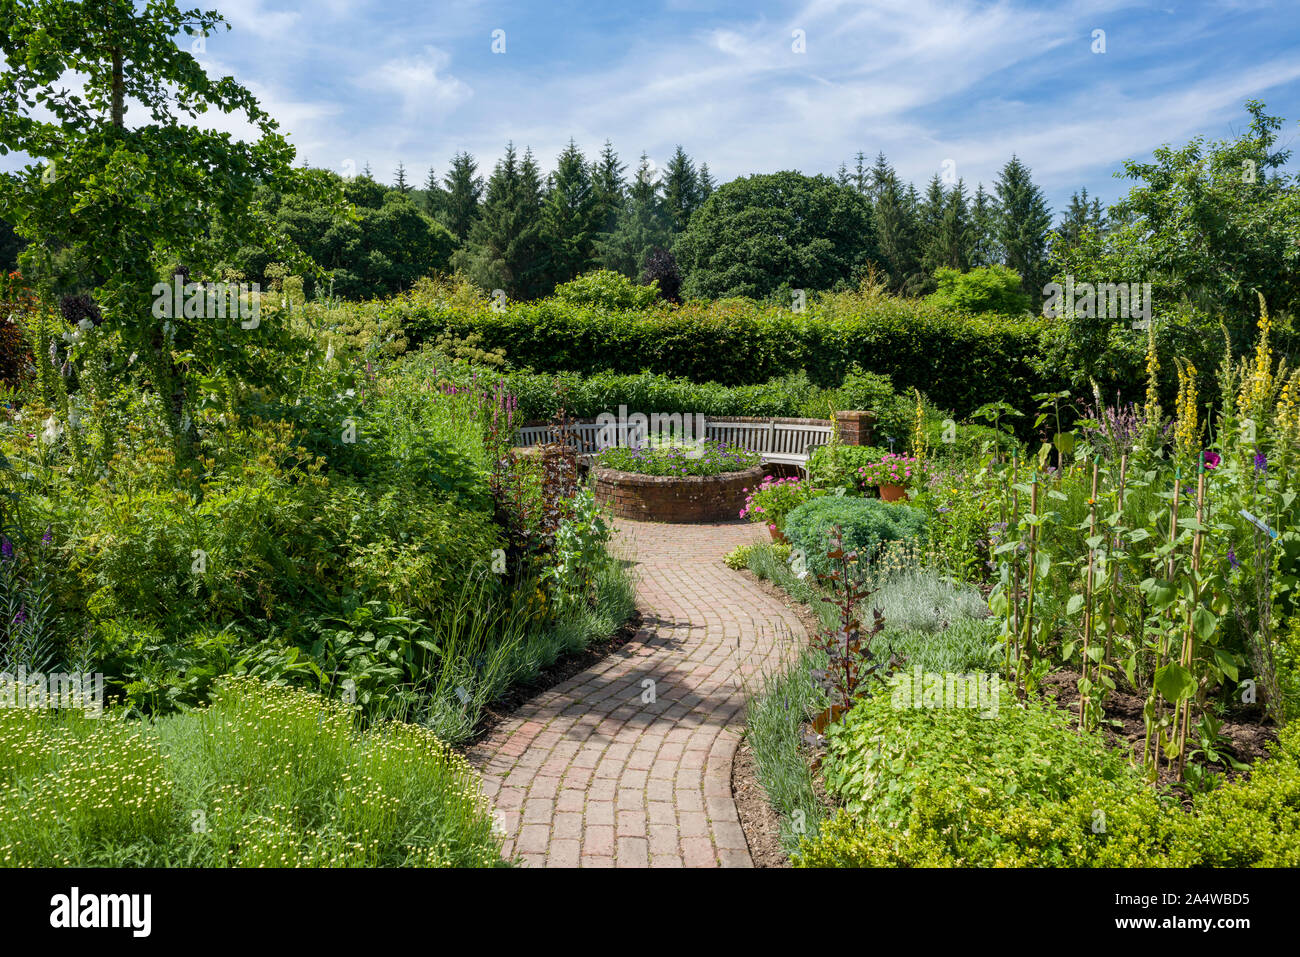 The herb garden at RHS Rosemoor in summer near Great Torrington, Devon, England. Stock Photo